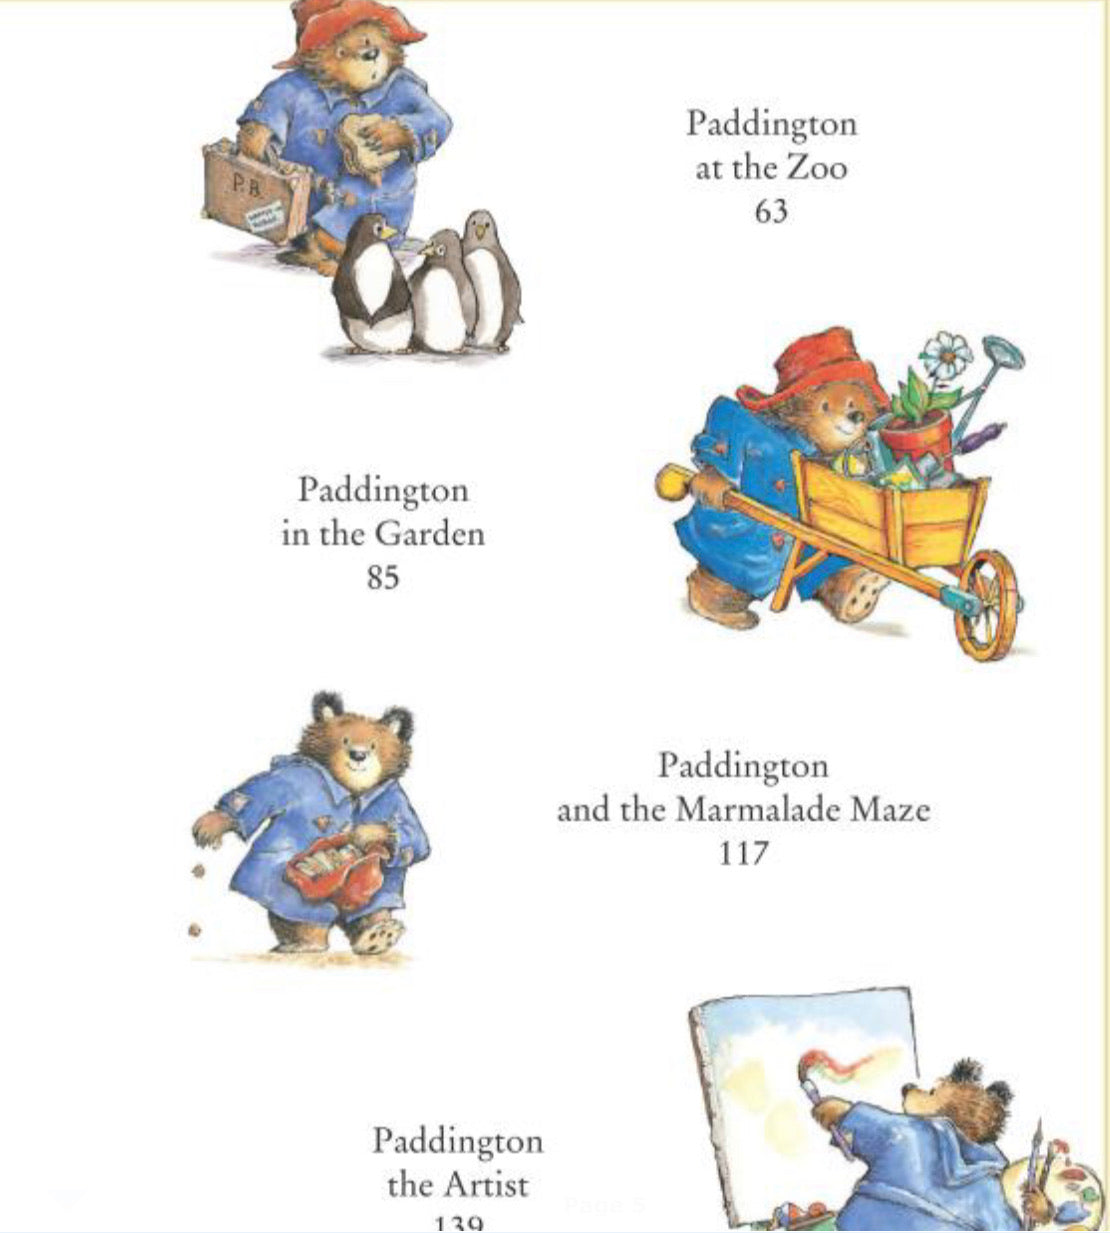 Paddington Bear Treasury Book - Treasured Bedtime Stories